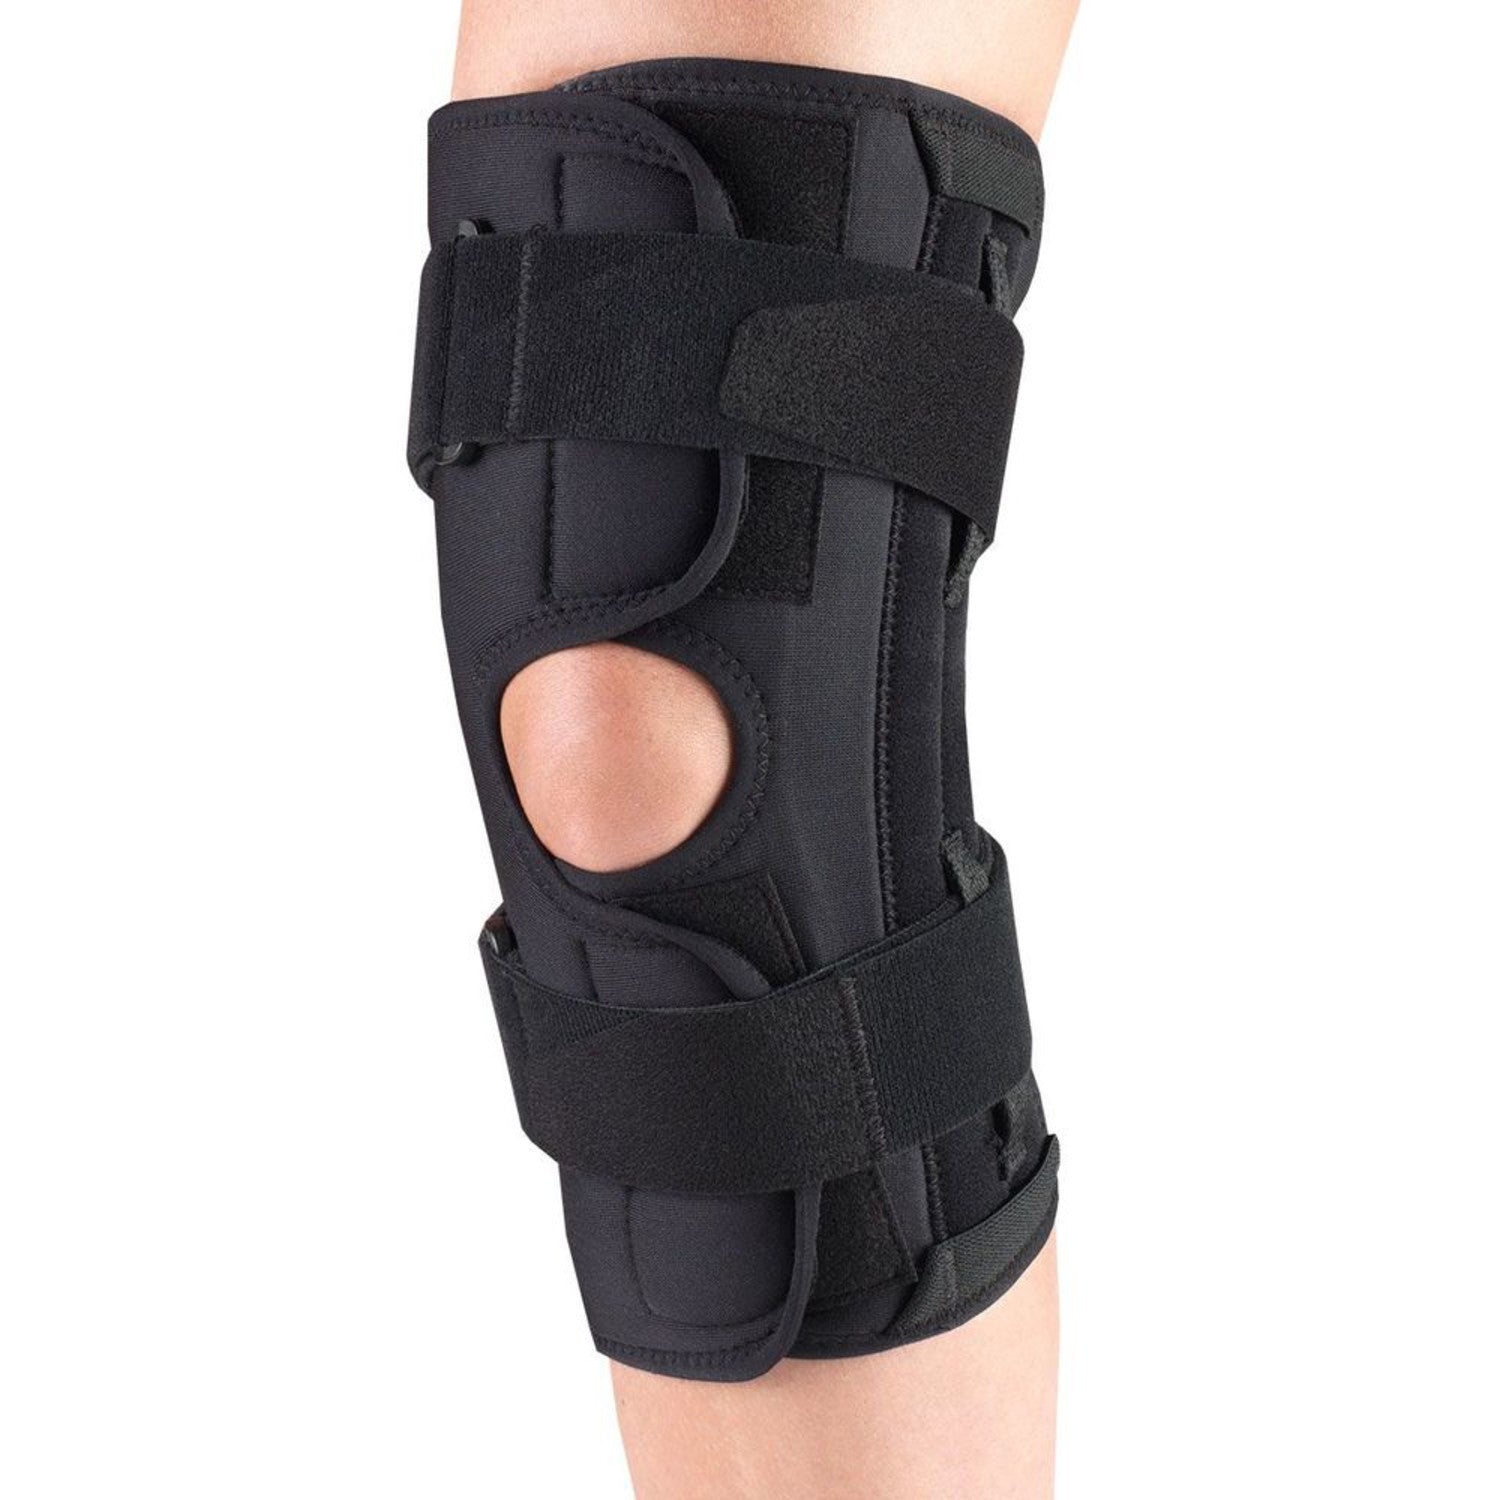 3 Strap Knee Brace Stabilizer Wrap Support Guard Patella Arthritis